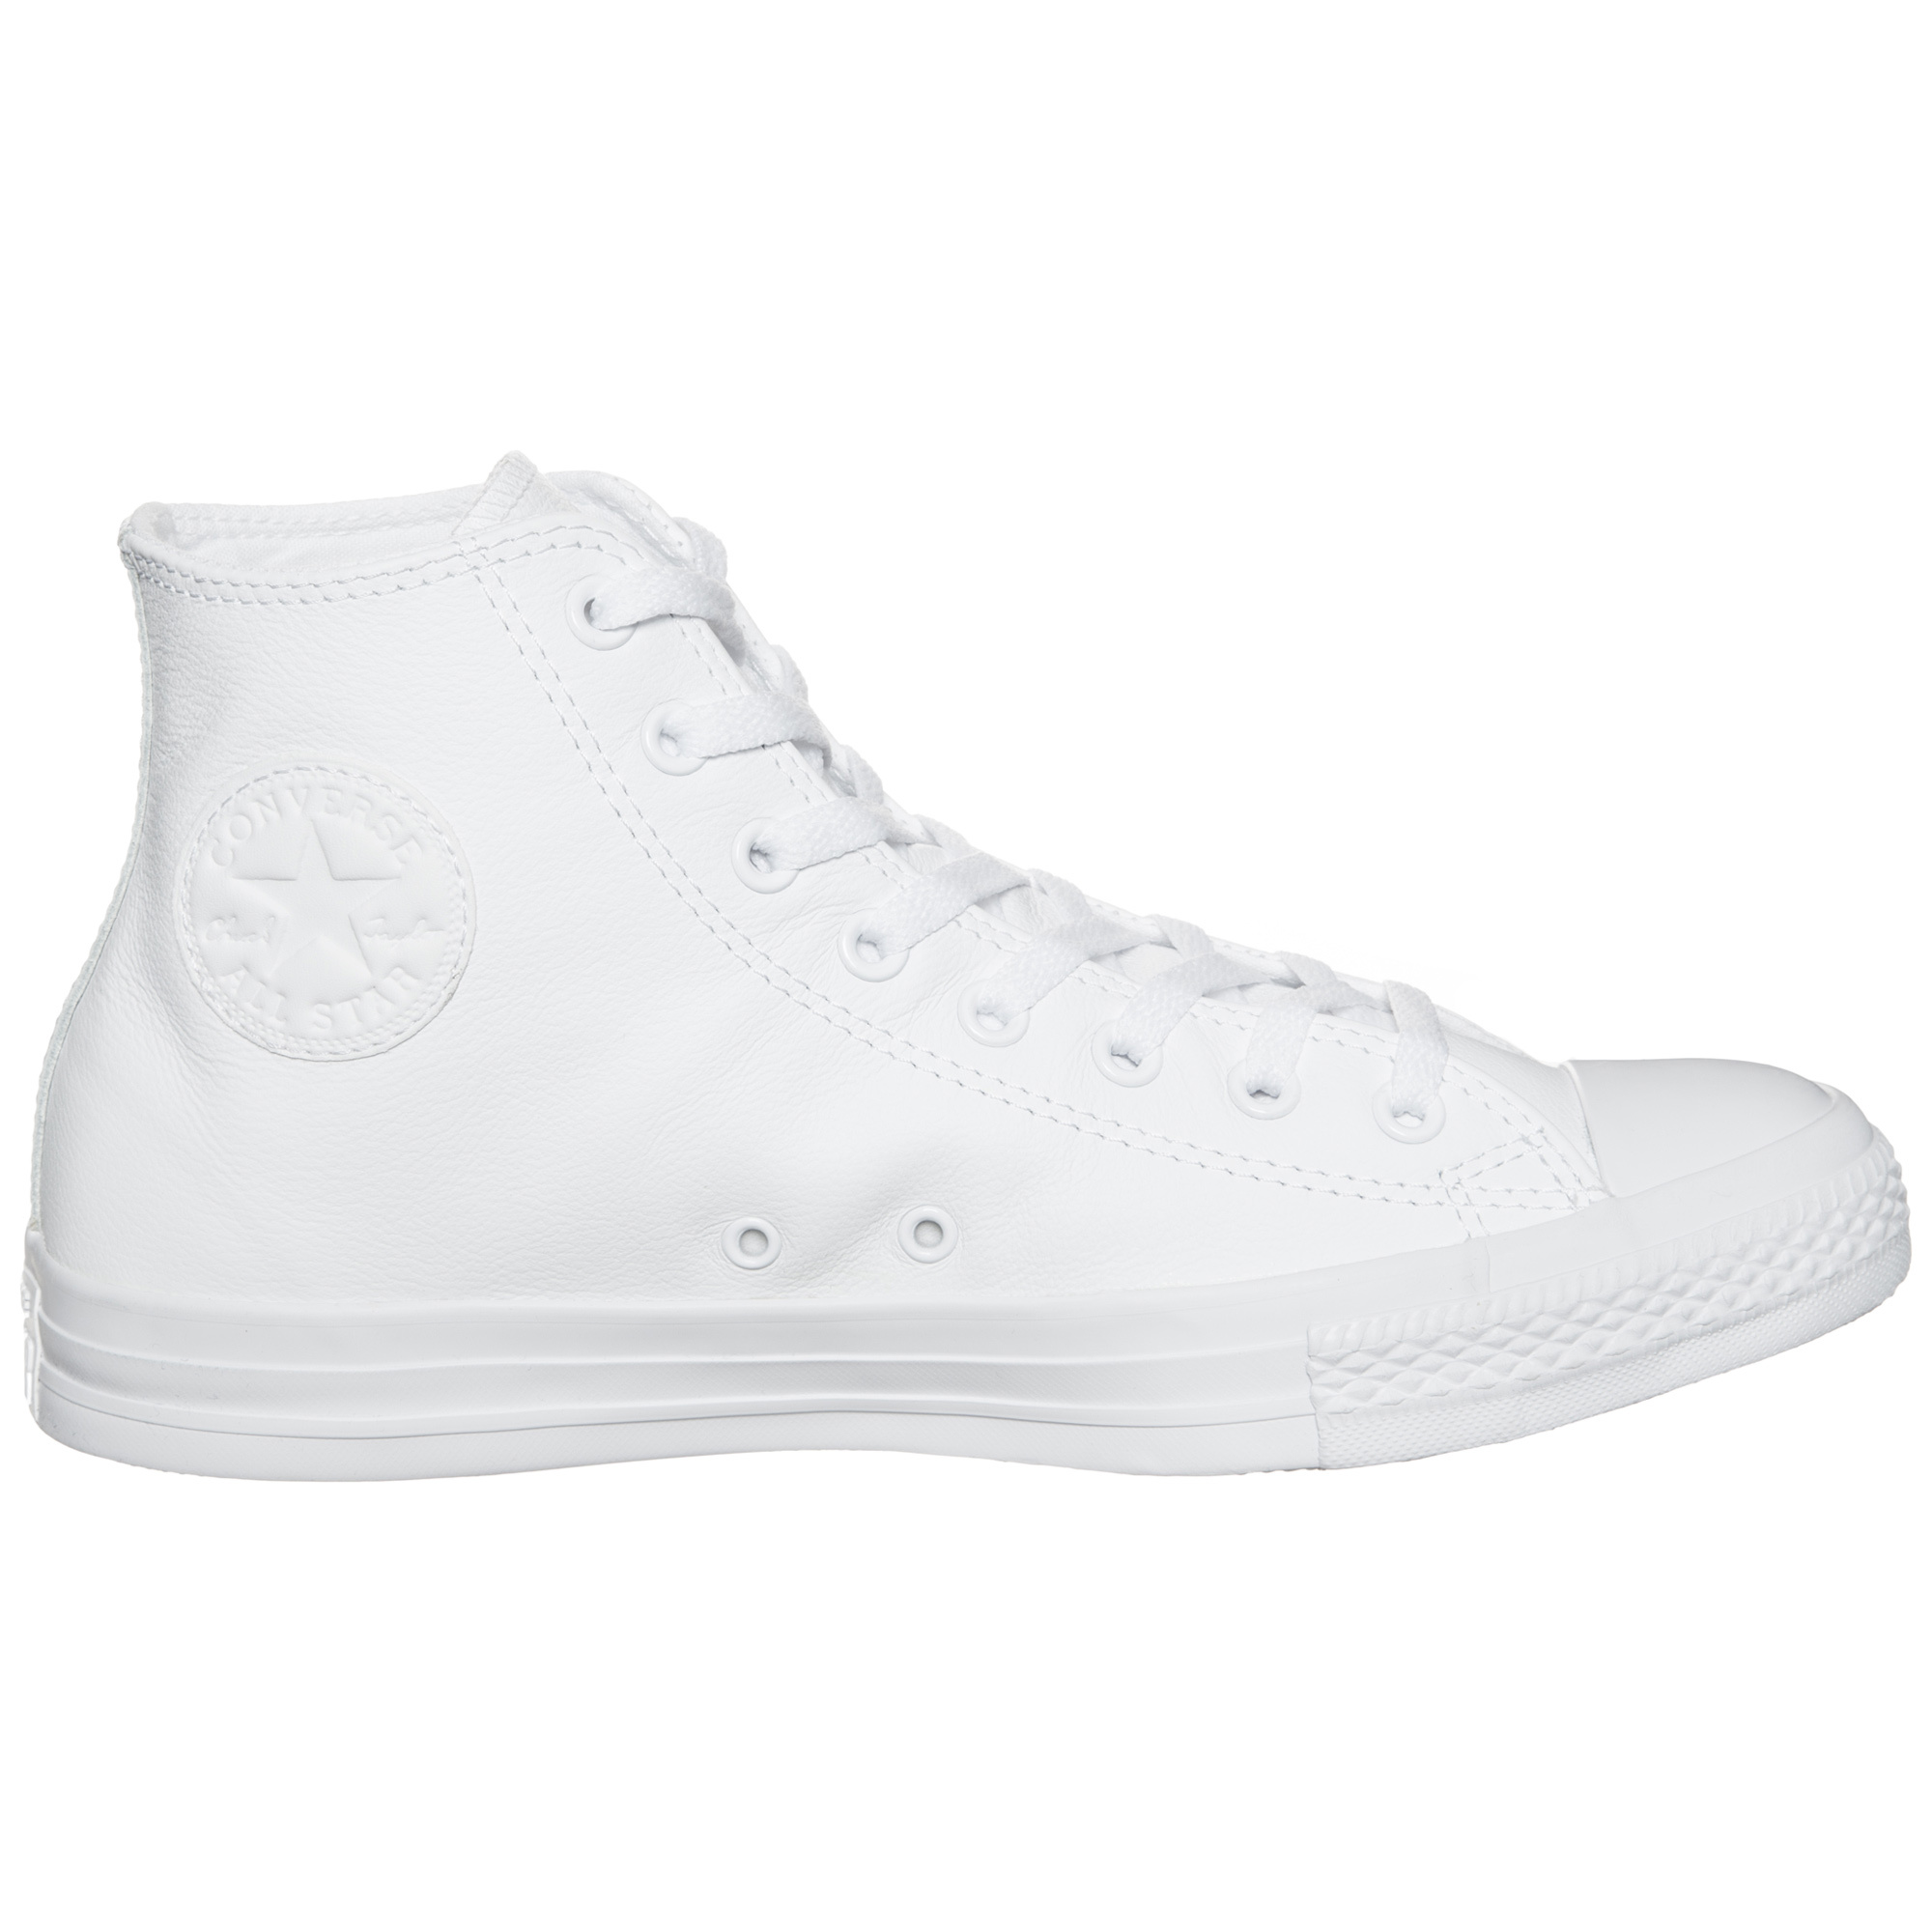 kdRpf Trampki & sneakersy CONVERSE Trampki wysokie Chuck Taylor All Star w kolorze Białym 